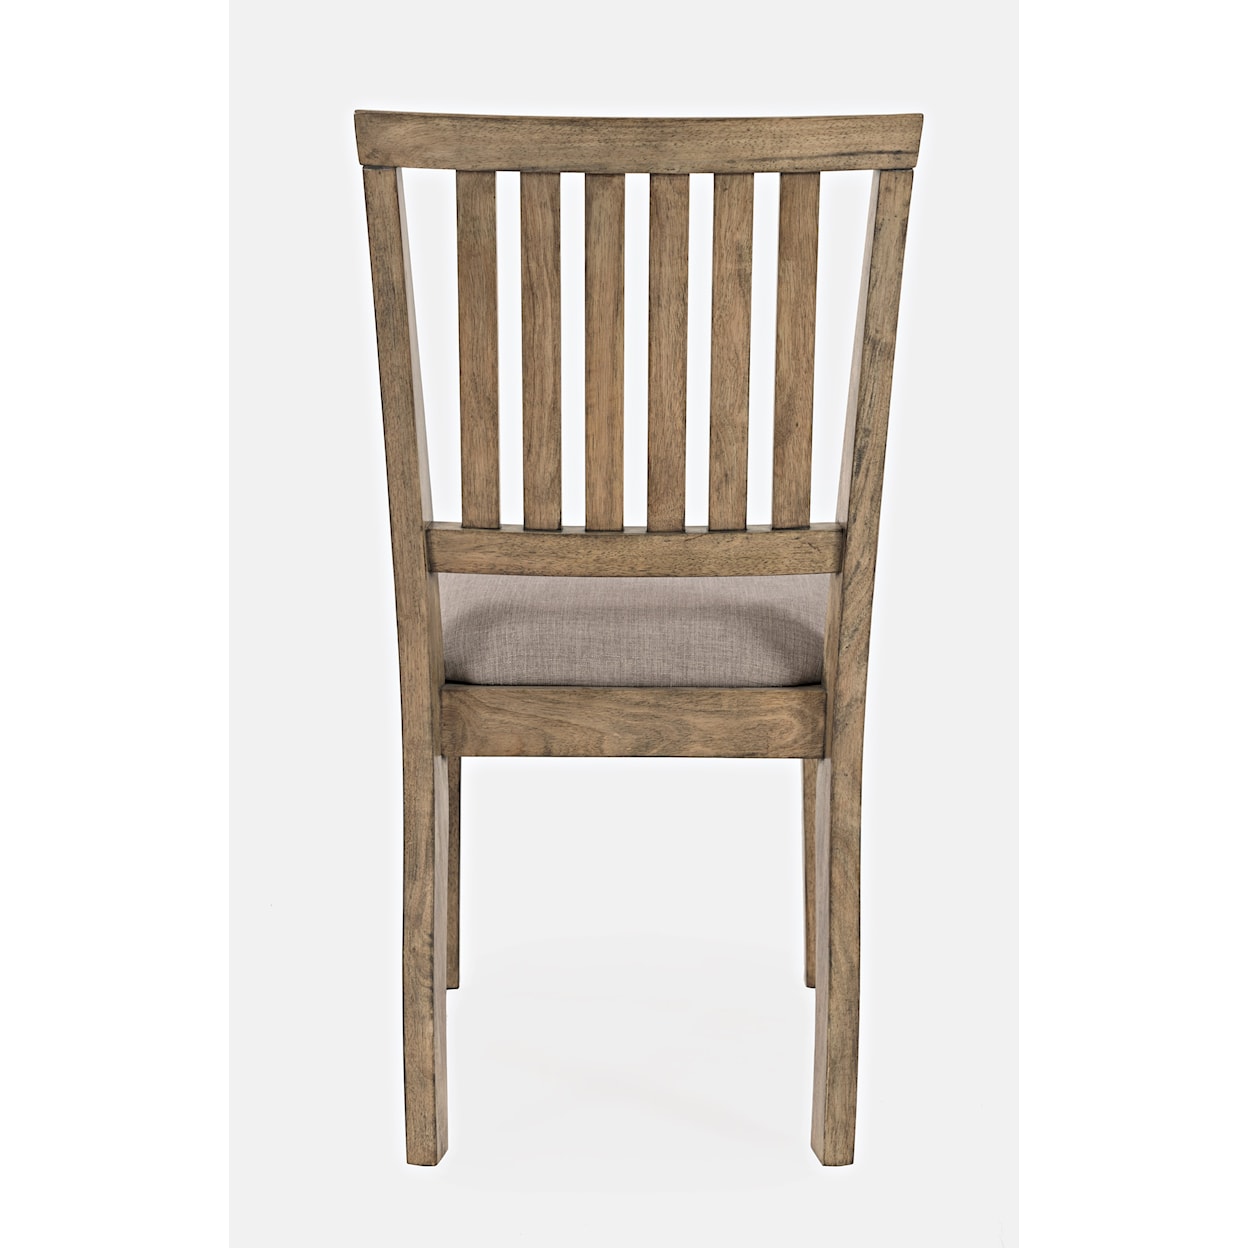 Jofran Prescott Park Slatback Chair (2/CTN)